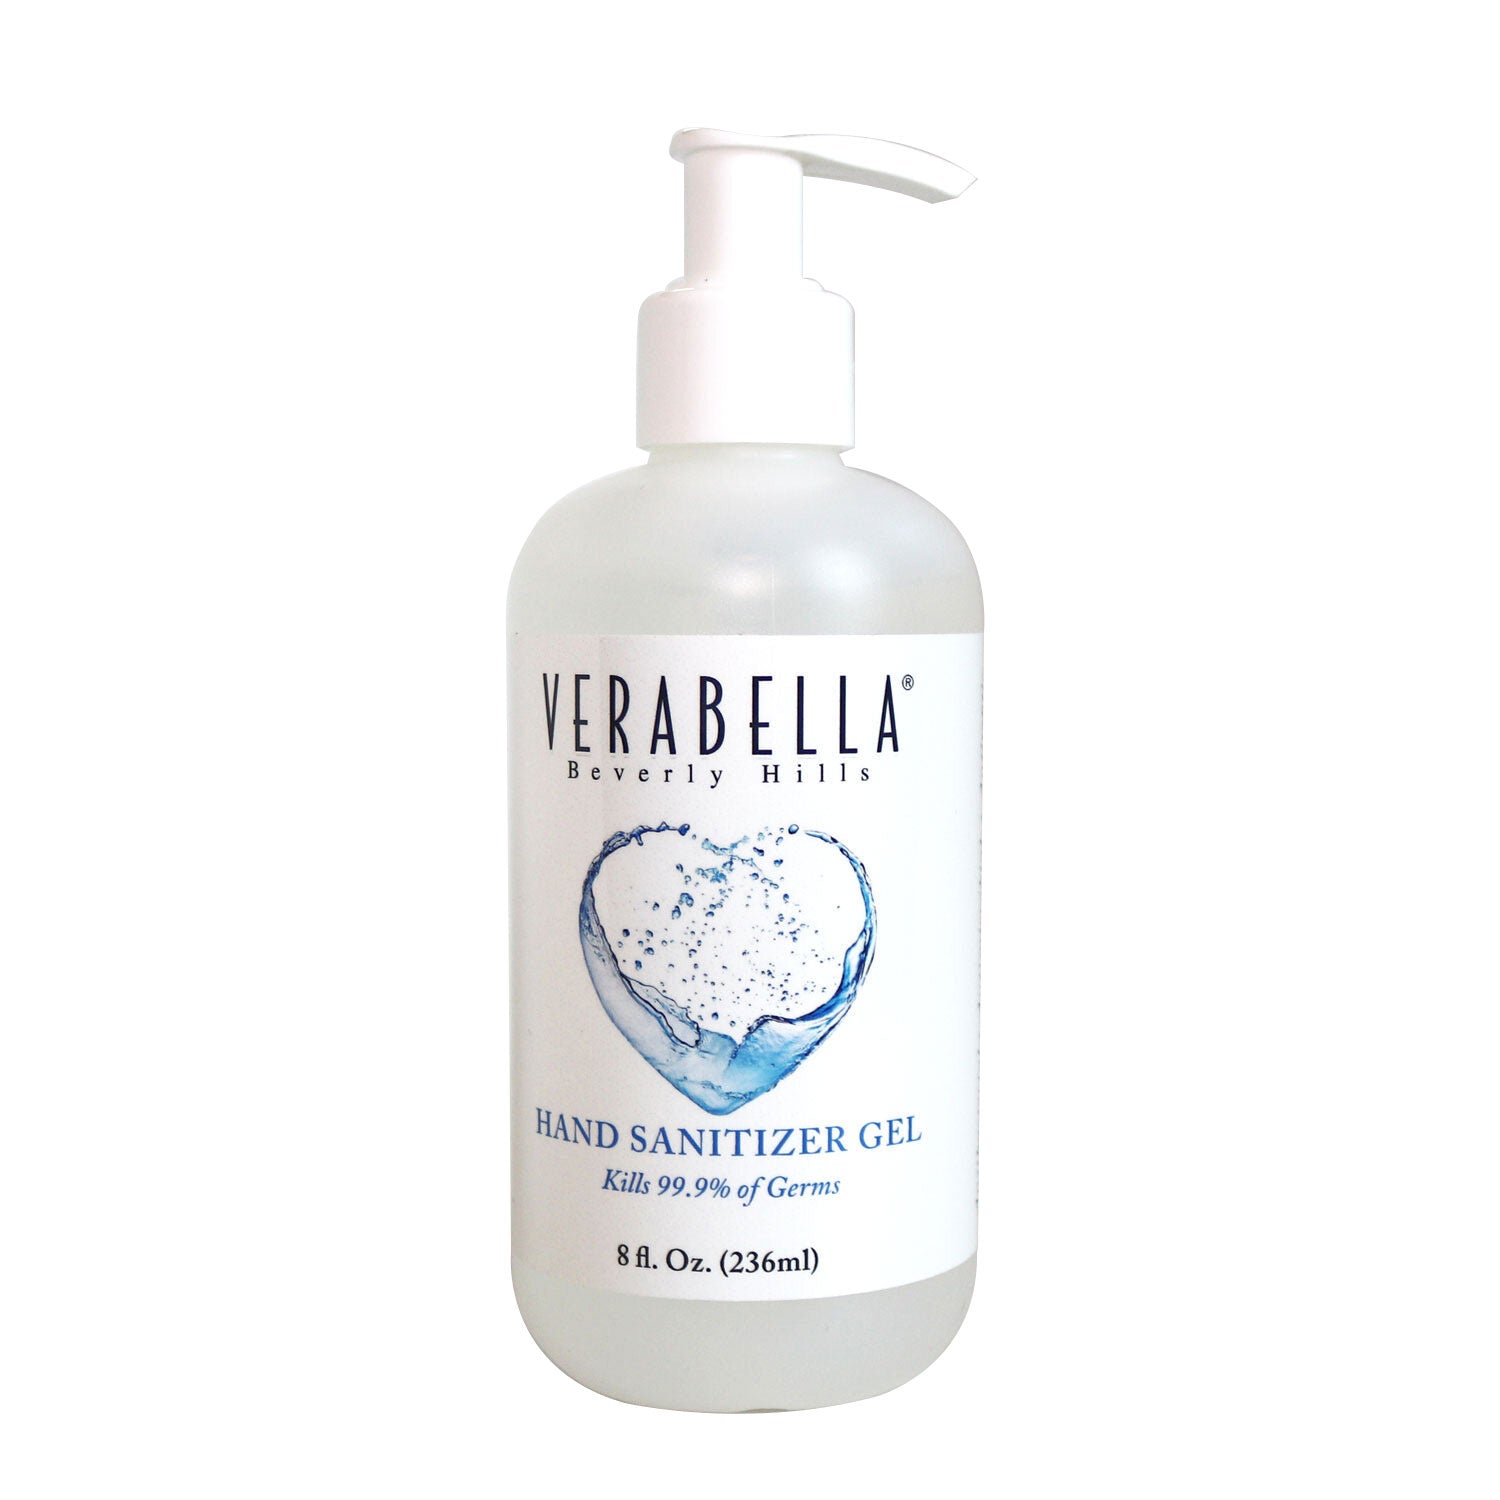 Verabella Hand Sanitizer - product image 